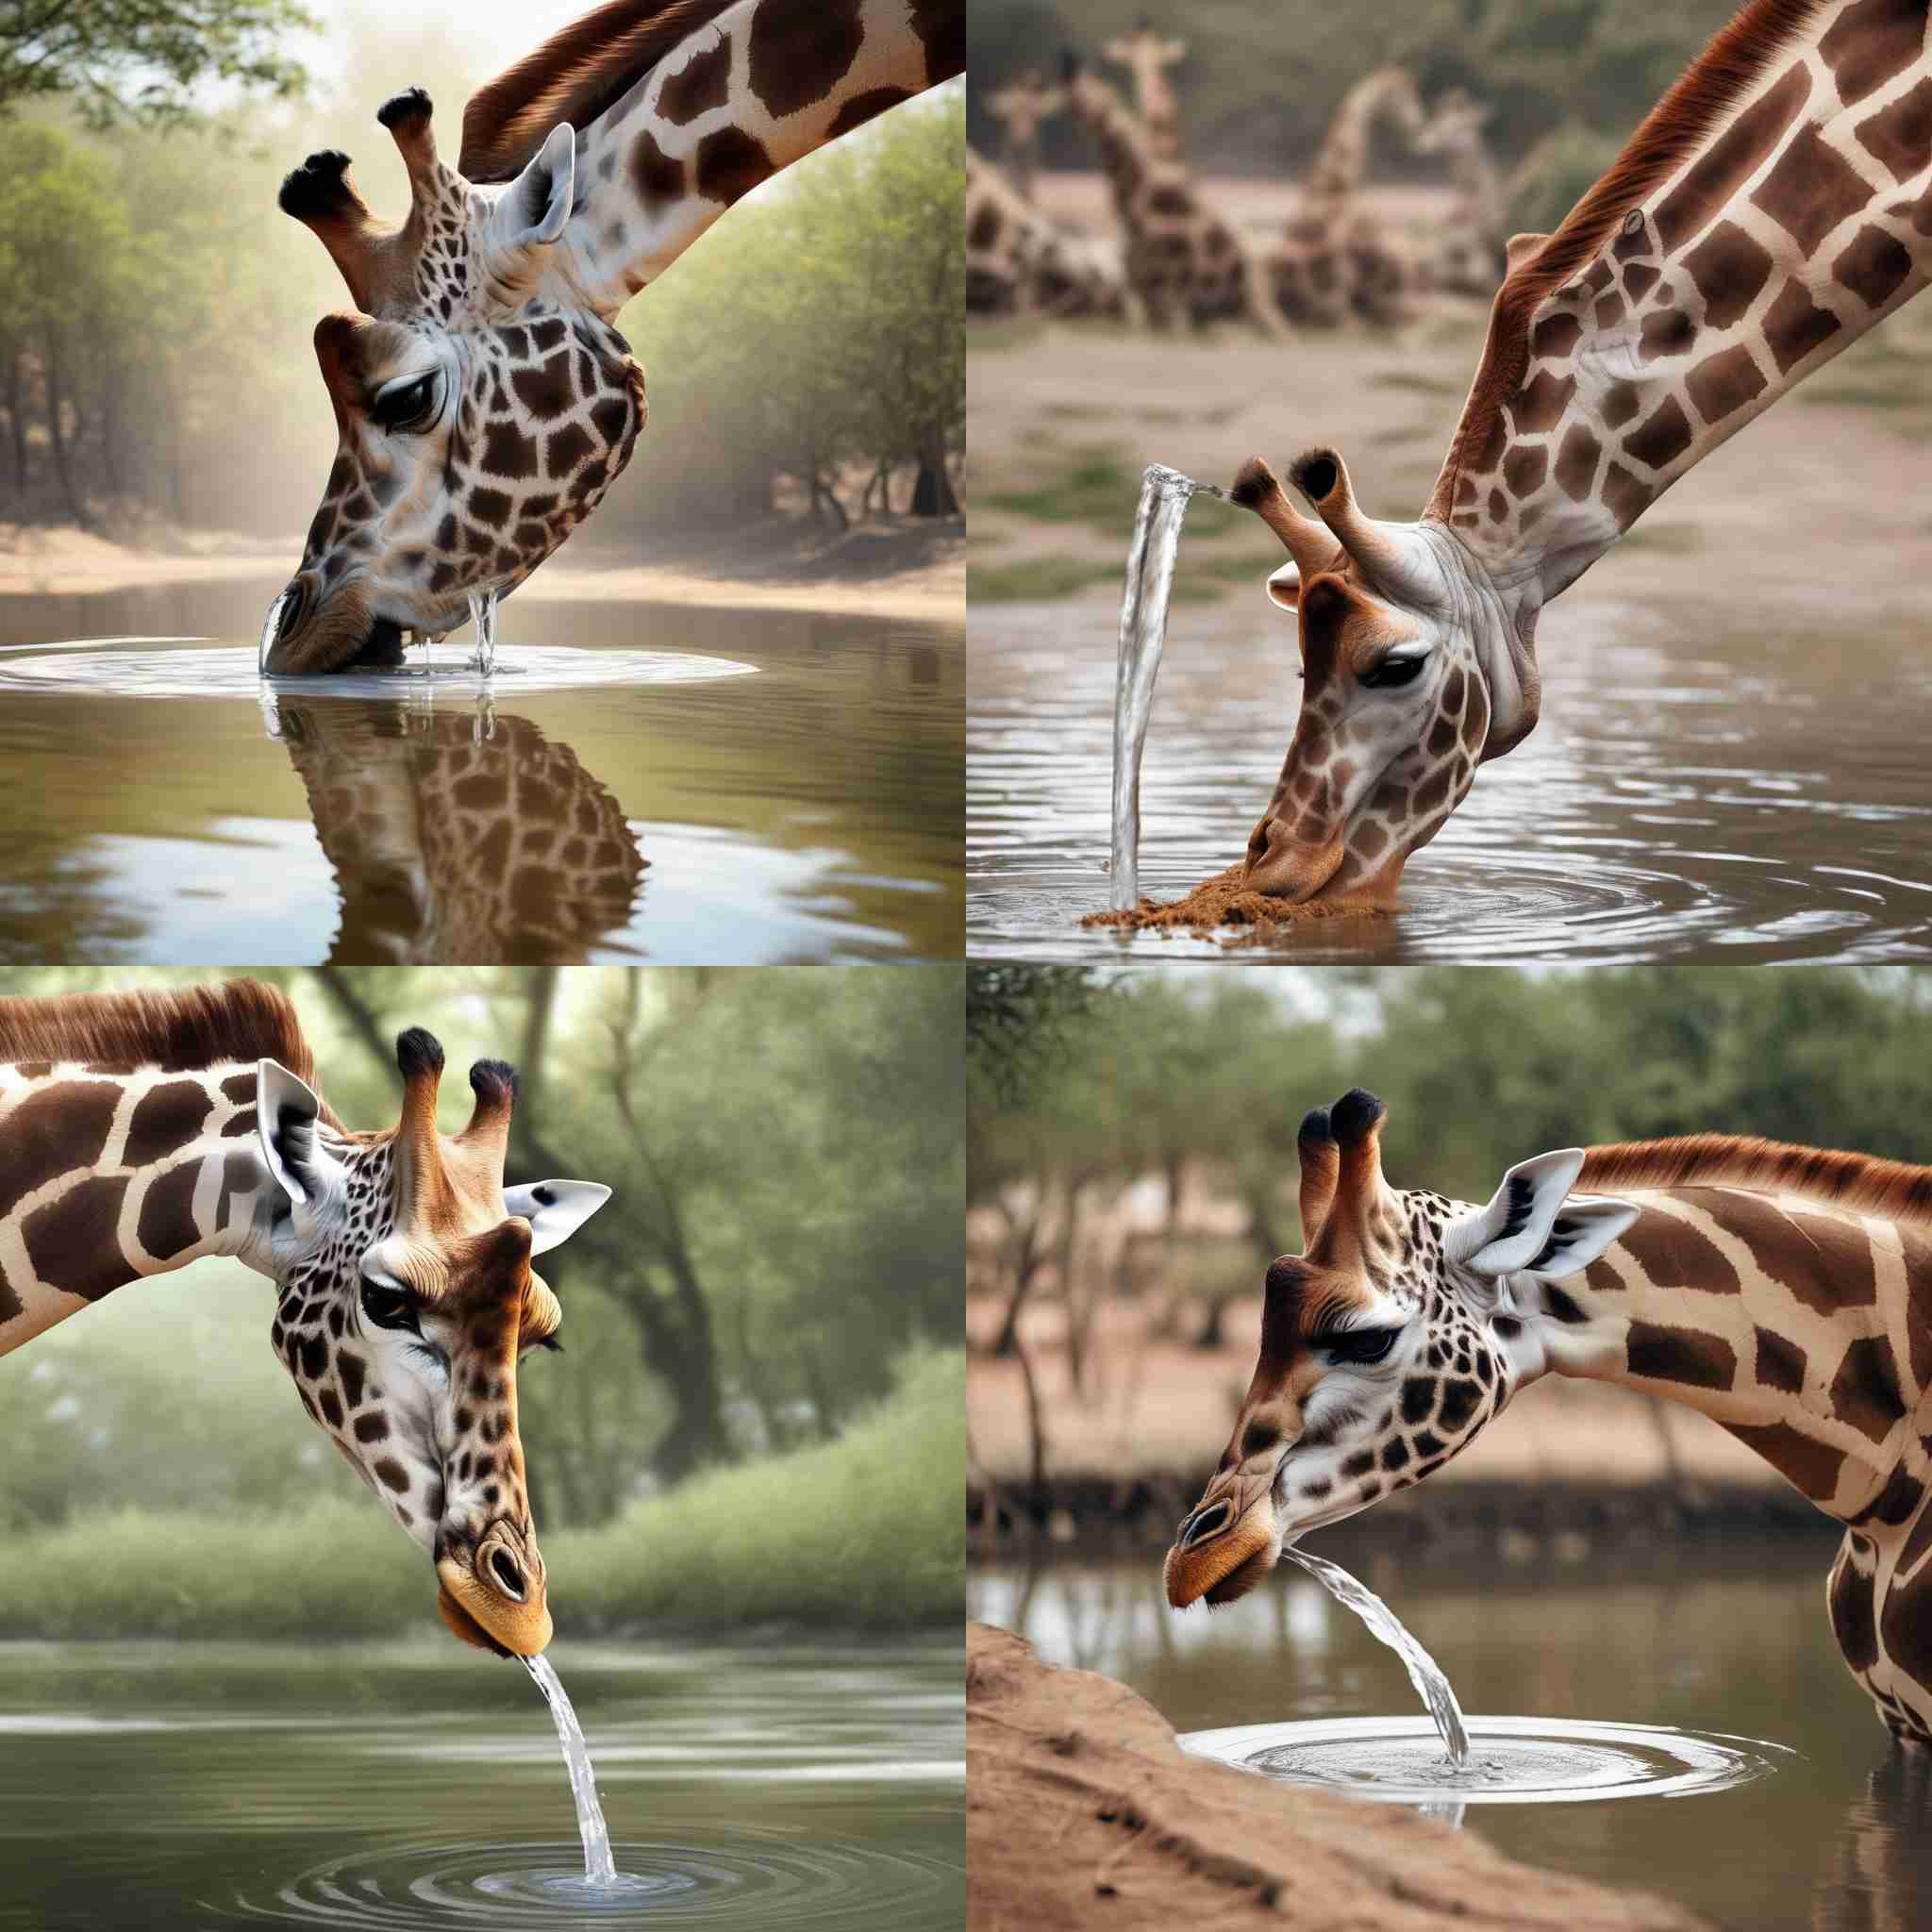 A giraffe drinking water